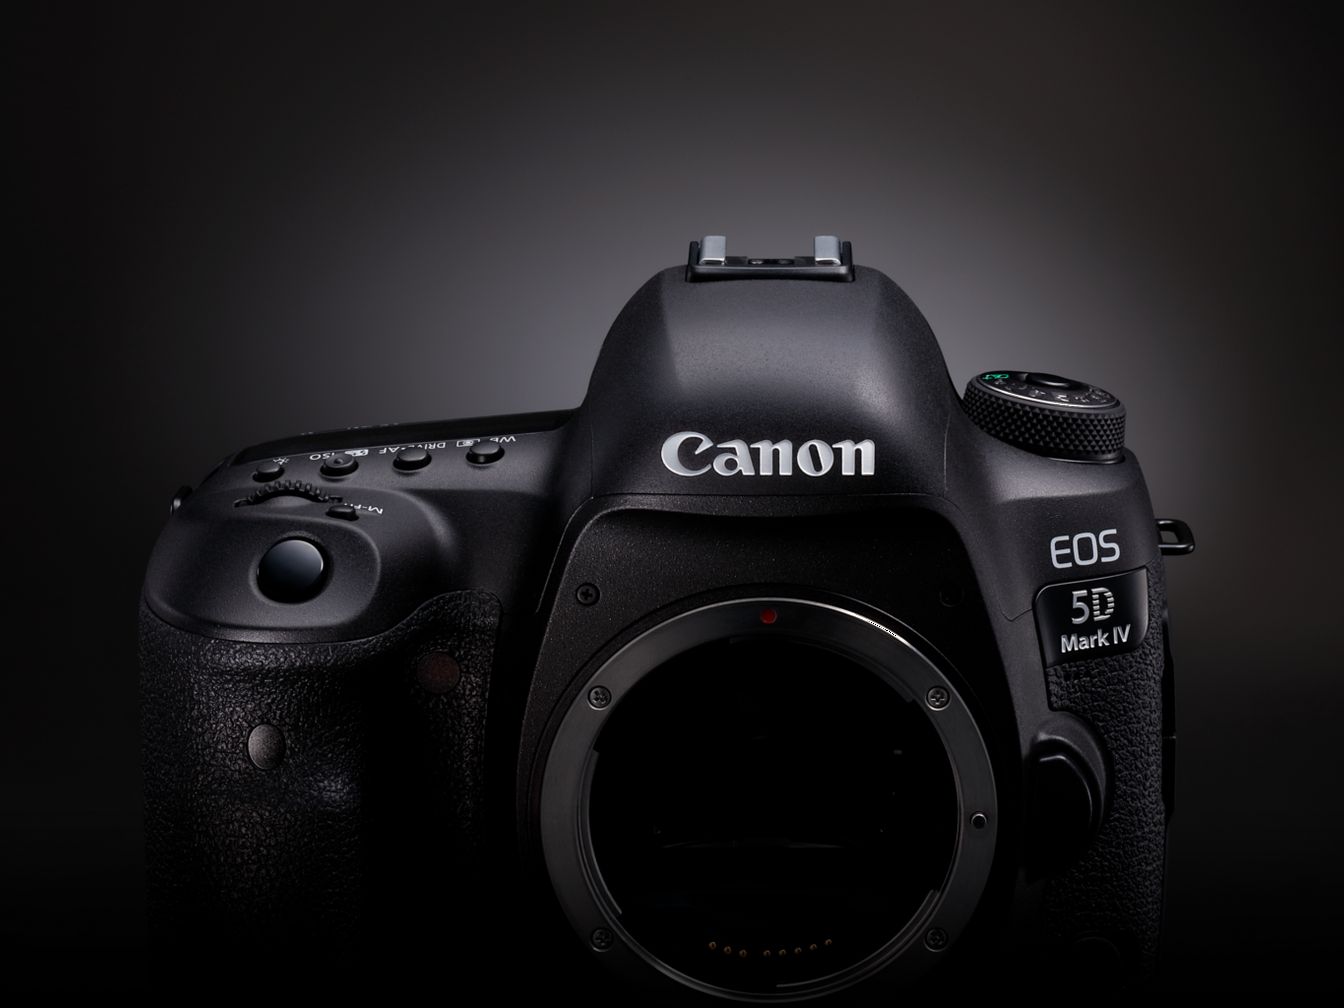 Canon EOS 5D Mark IV: كيفية الاختيار والشراء على لوحة الإعلانات في إسرائيل